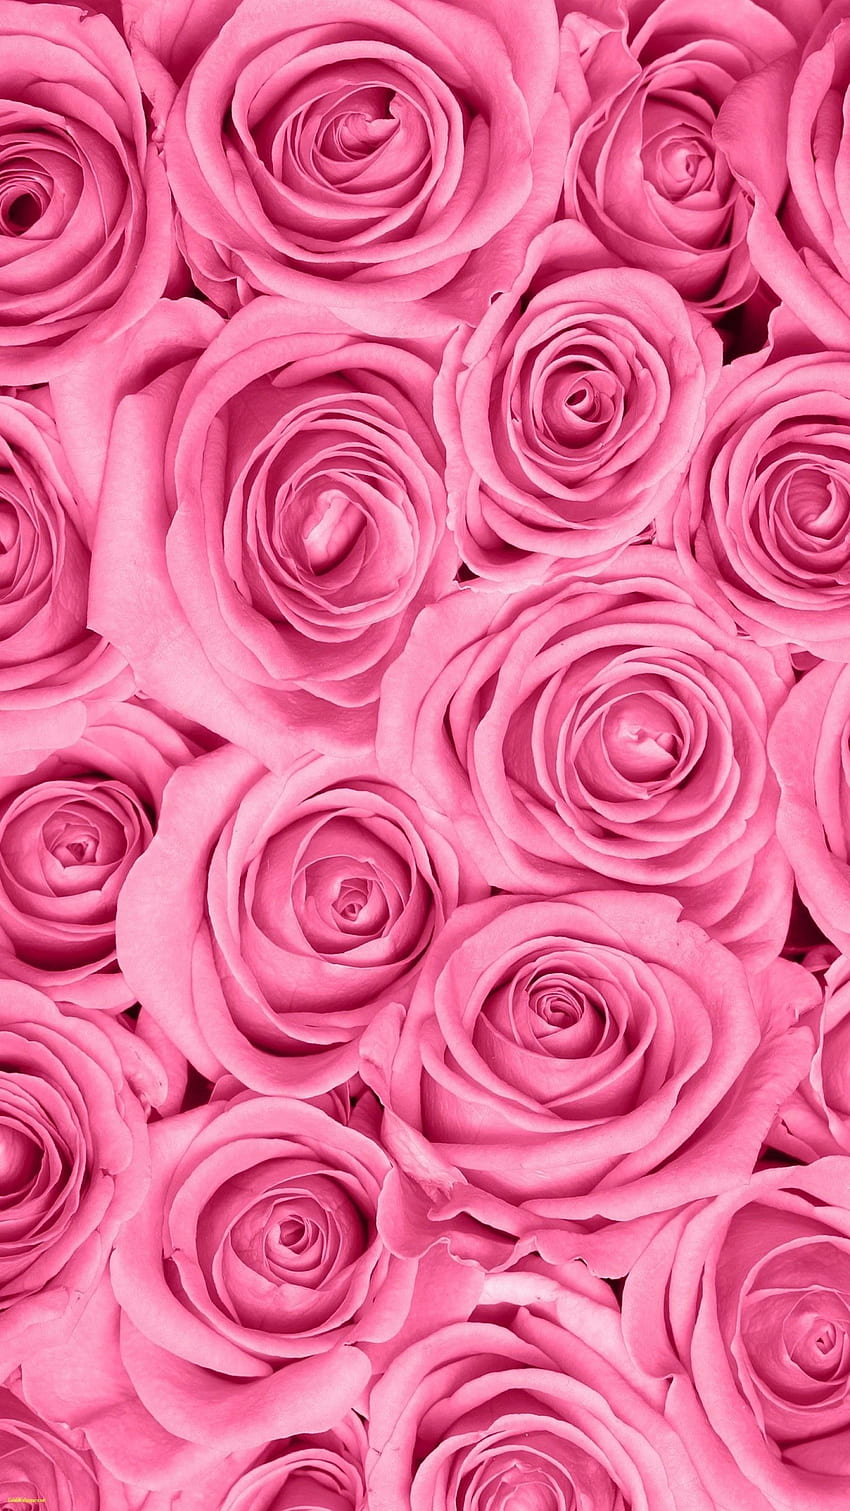 Free download Description Download Pink Rose Wallpaper Ultra Hd Widescreen  higher 4000x2887 for your Desktop Mobile  Tablet  Explore 72 Pink  Roses Wallpaper  Pink Roses Background Wallpaper Pink Roses Pink Roses  Backgrounds